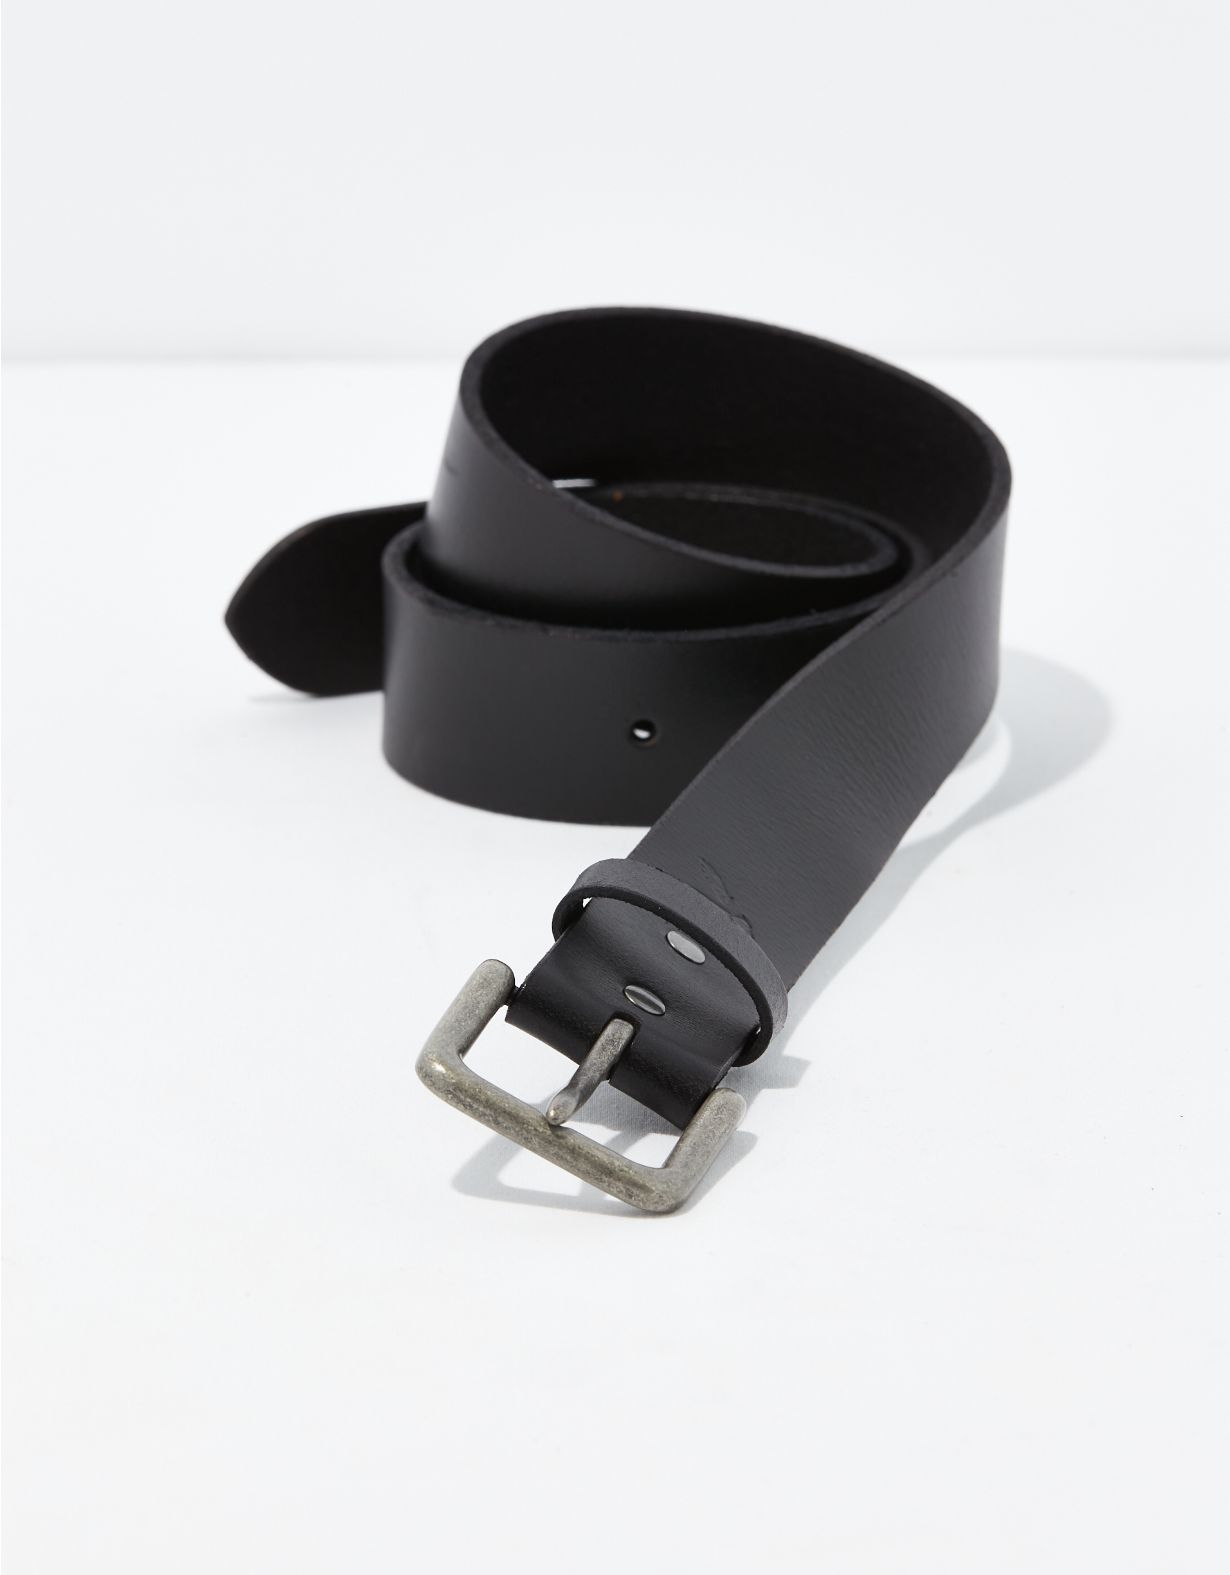 AEO Matte Leather Belt